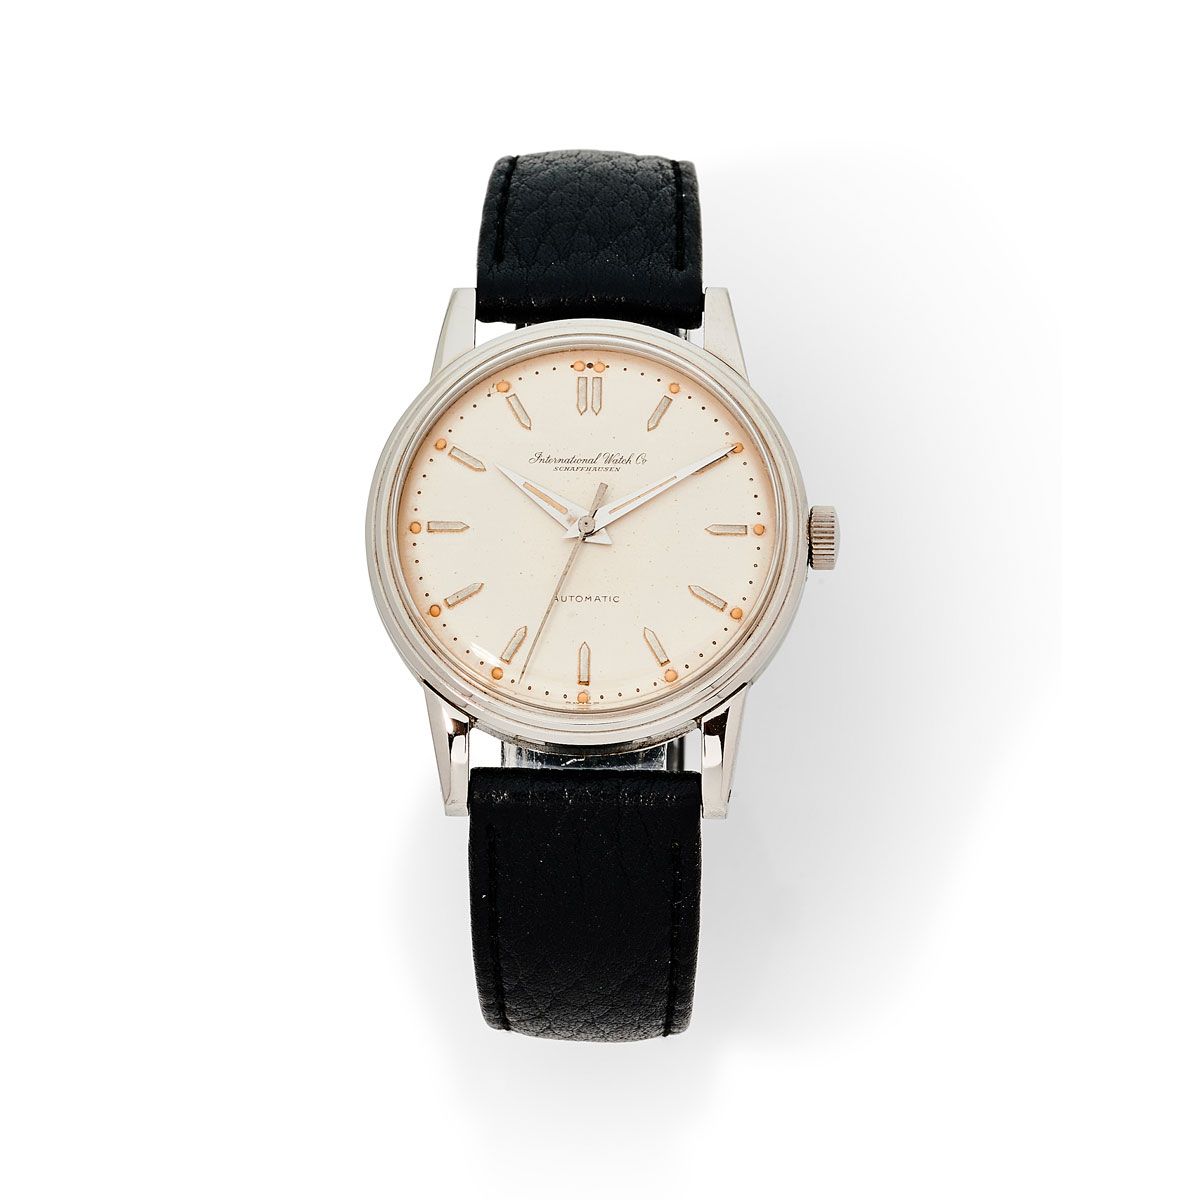 Null Internationnal Watch Co., n° 1382675, vers 1955.

Une belle montre classiqu&hellip;